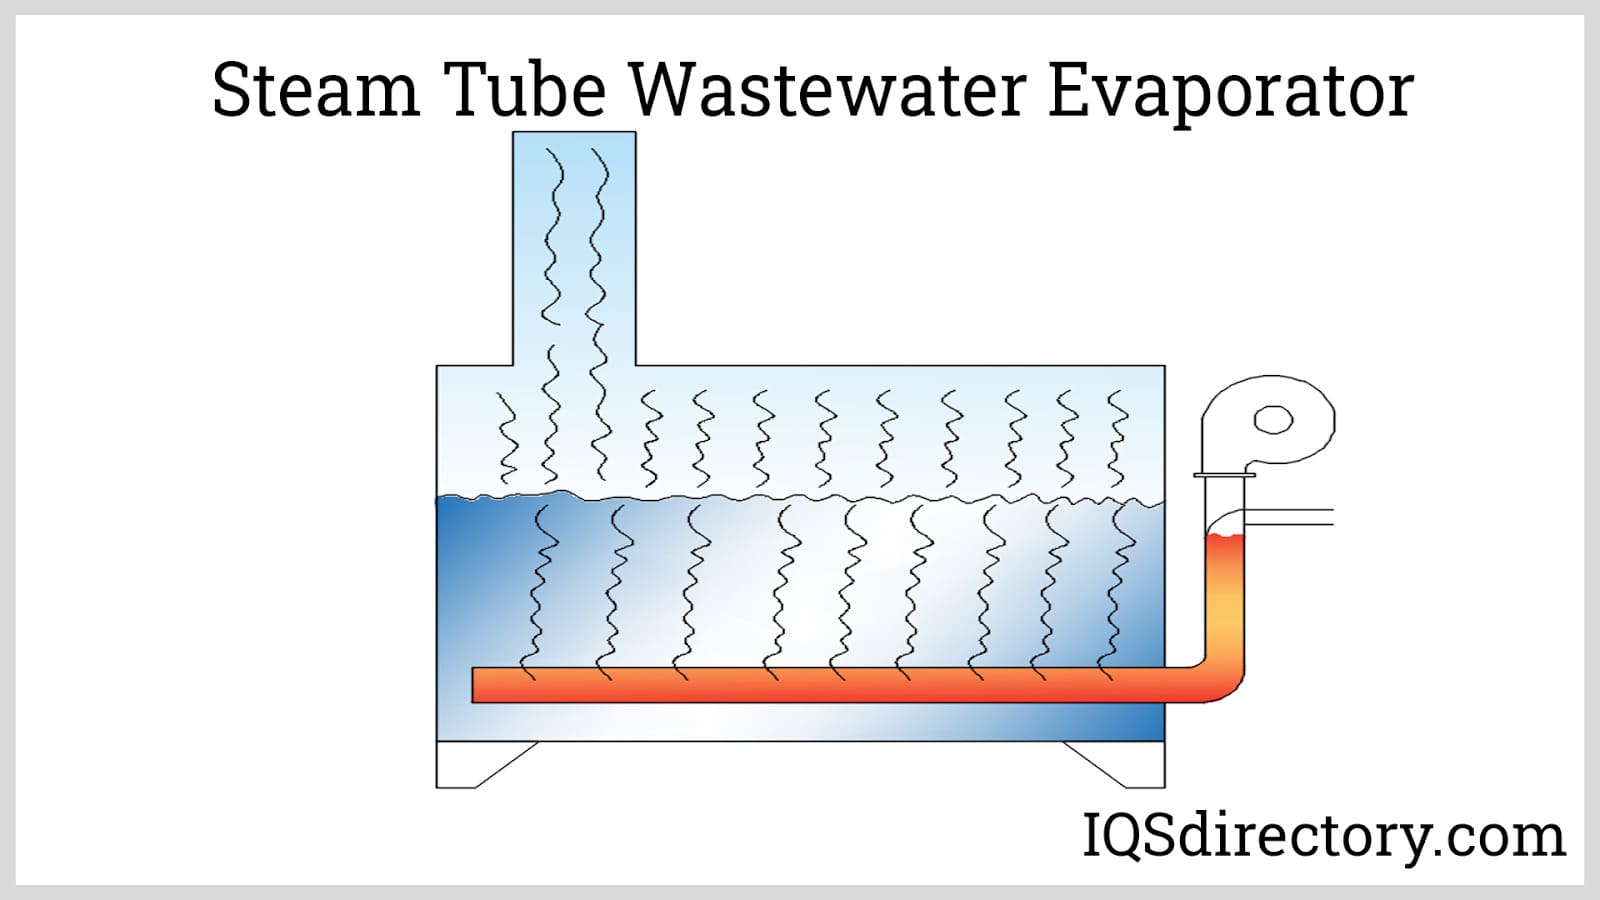 Steam Tube Wastewater Evaporator